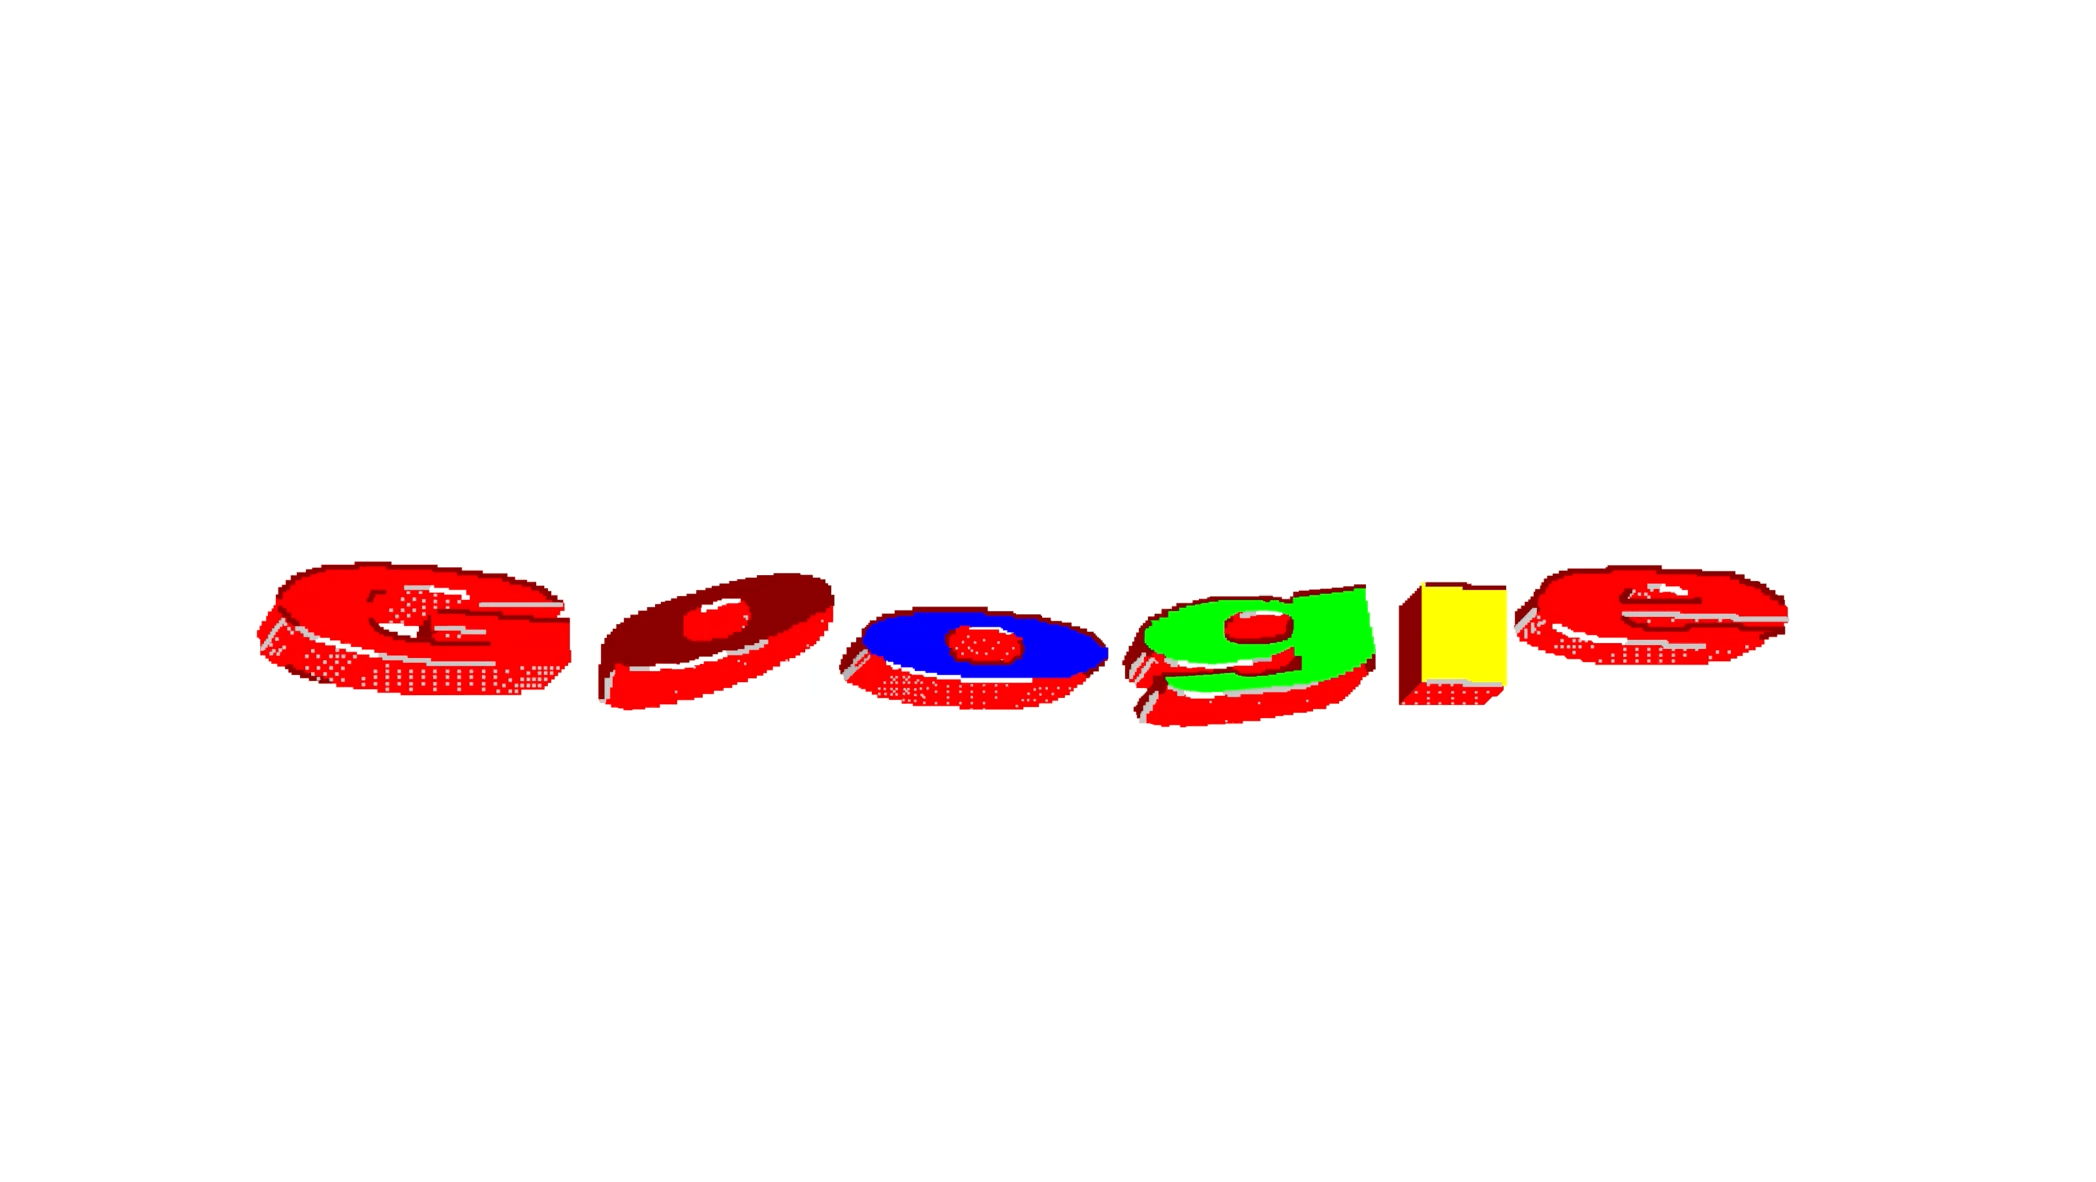 Gif animé illustrant l'évolution du logo Google